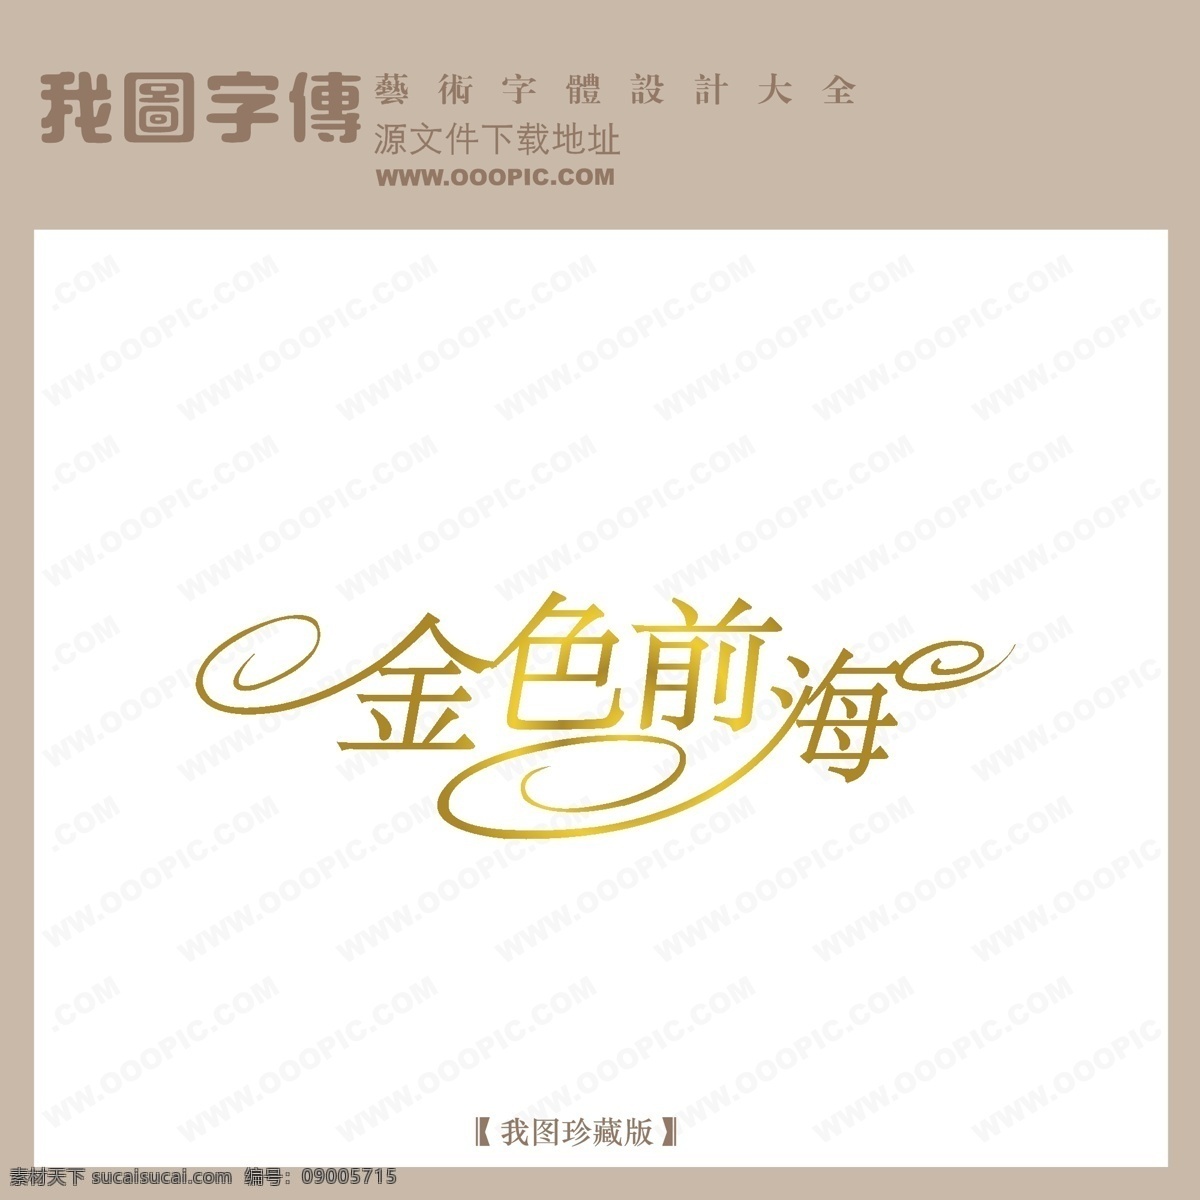 logo 艺术 字 现代艺术字 写真艺术字 艺术字 艺术字设计 中文 现代艺术 字体 设计艺术 金色前海 矢量图